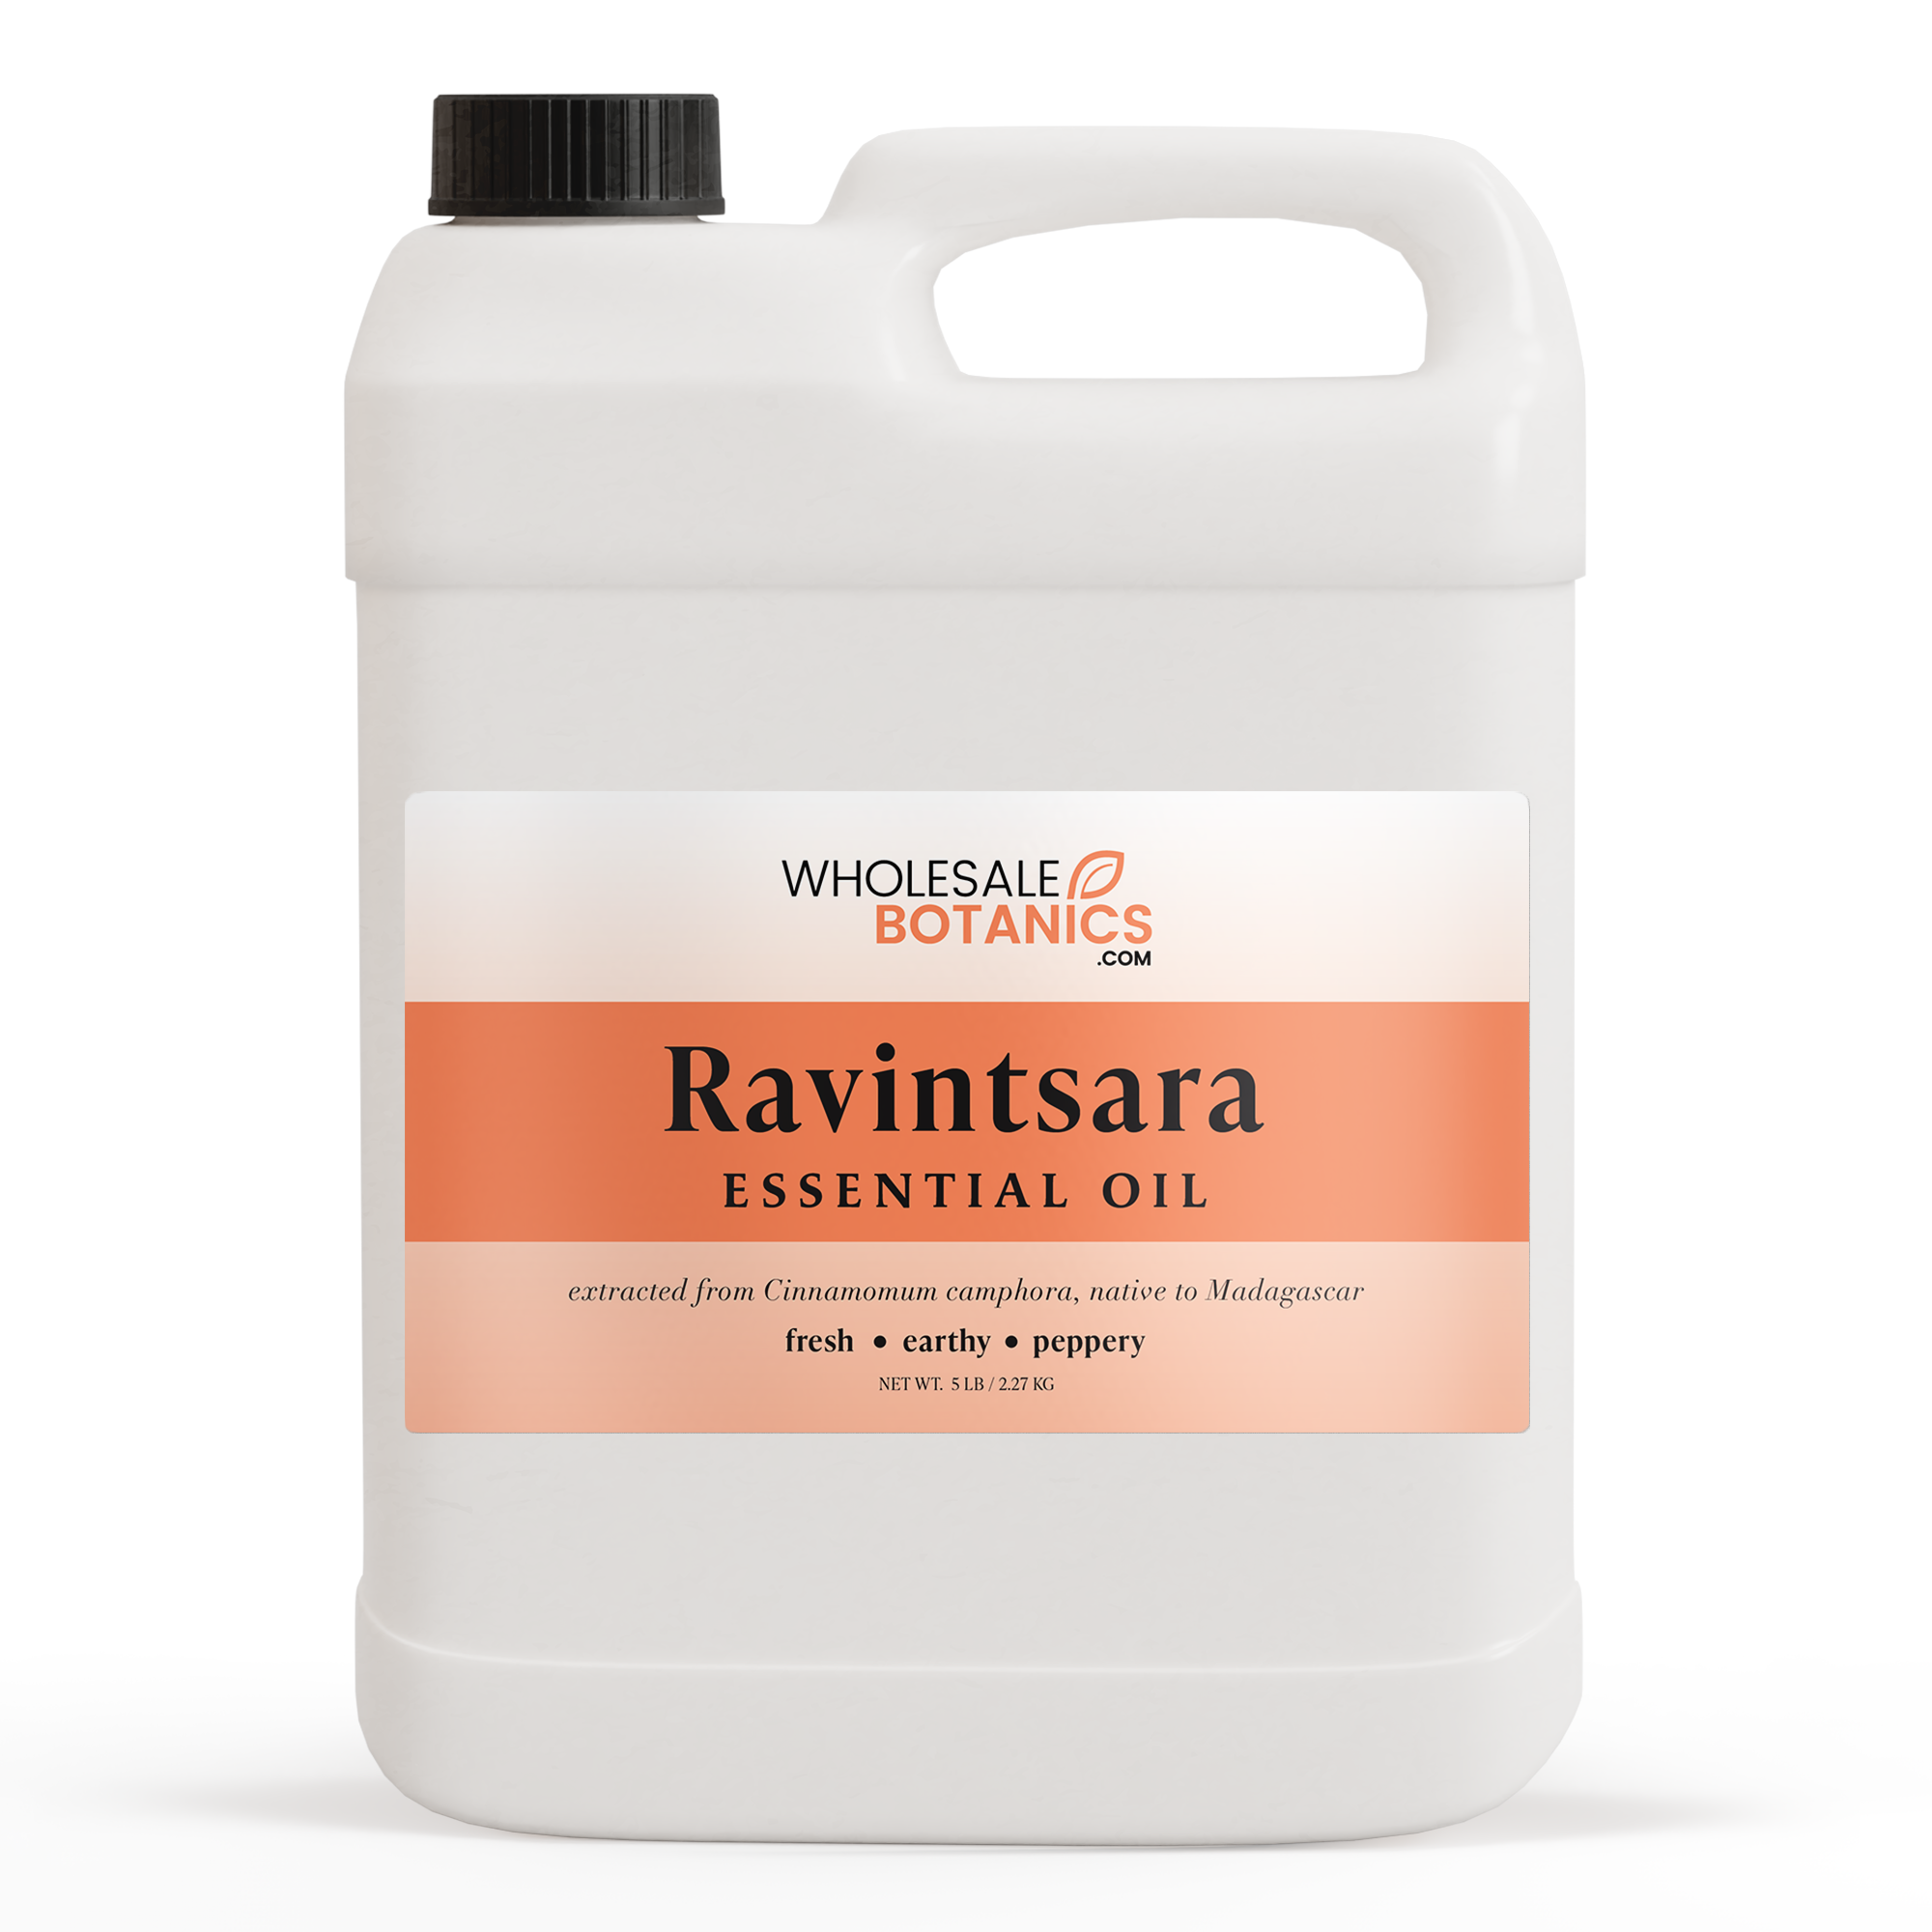 Ravintsara Essential Oil Uses and Benefits